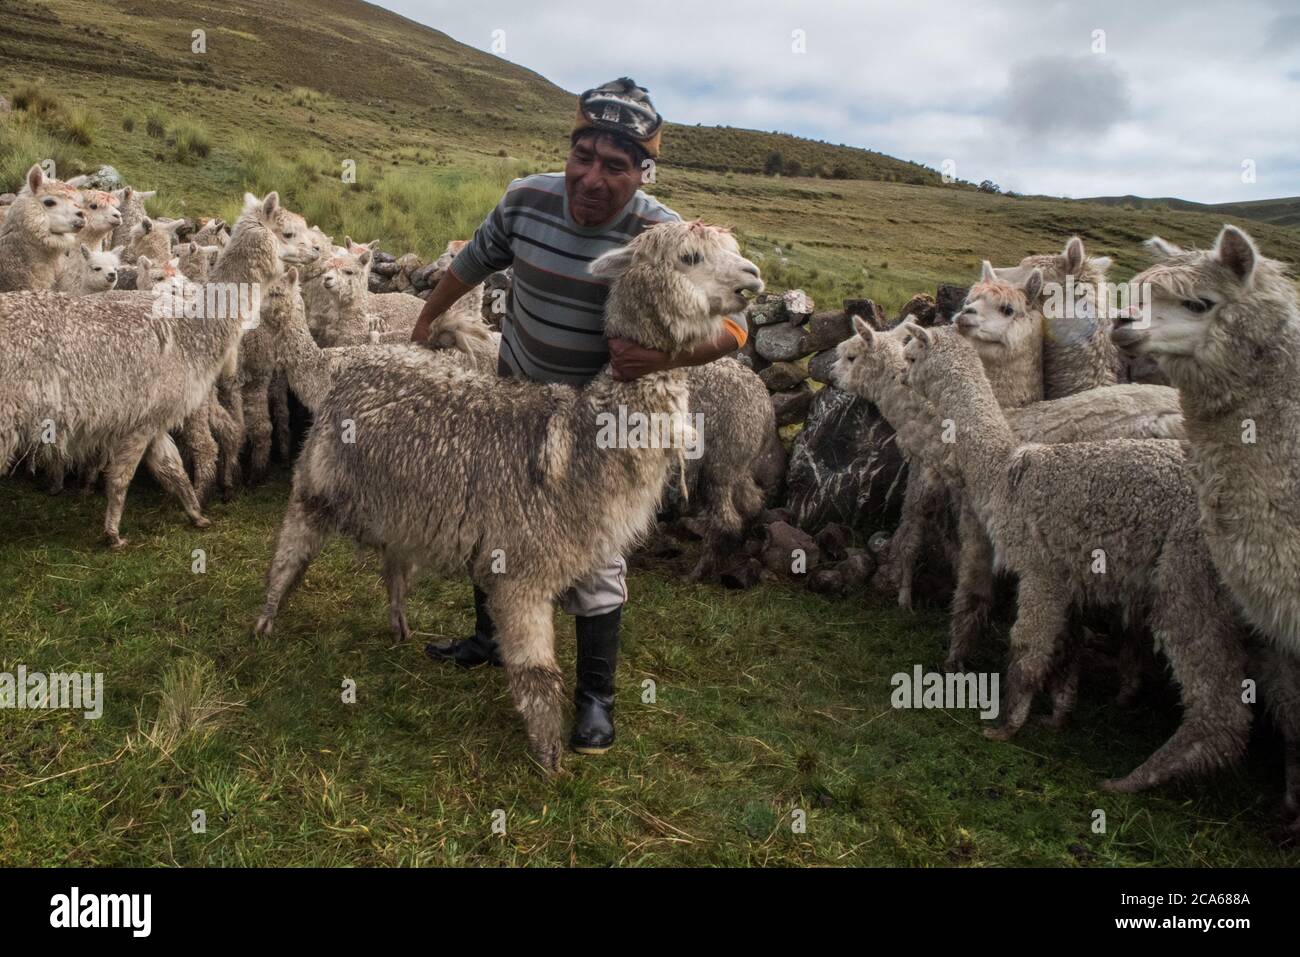 A peruvian man restrains an alpaca in preparation for a health check. Stock Photo